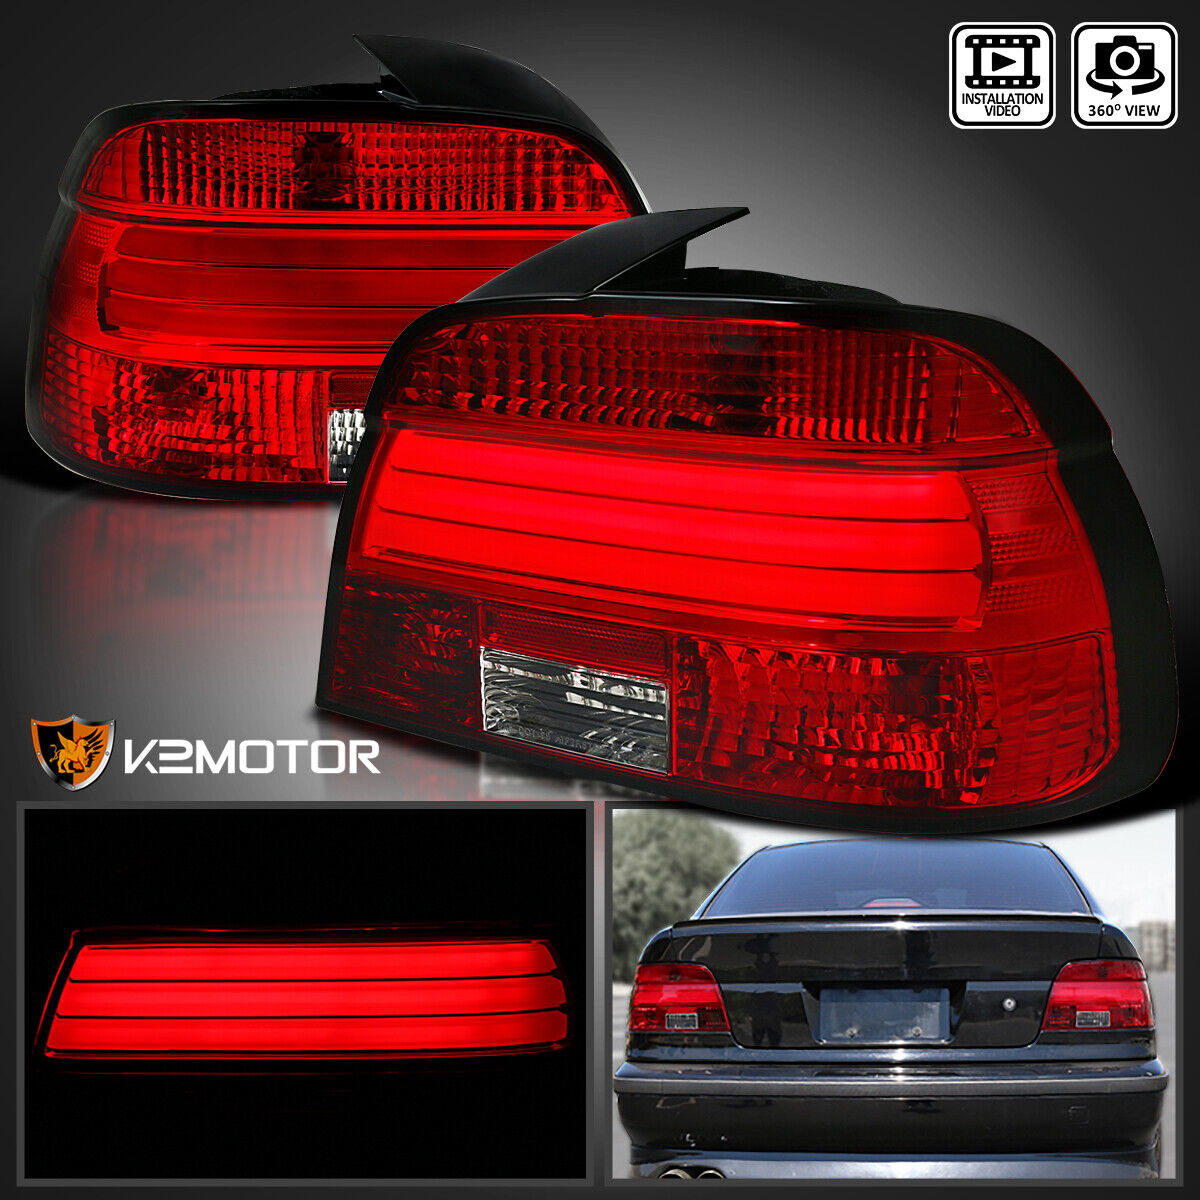 Red/Clear Fits 2001-2003 BMW E39 5-Series M5 525i 530i 540i LED Tail Lights Lamp